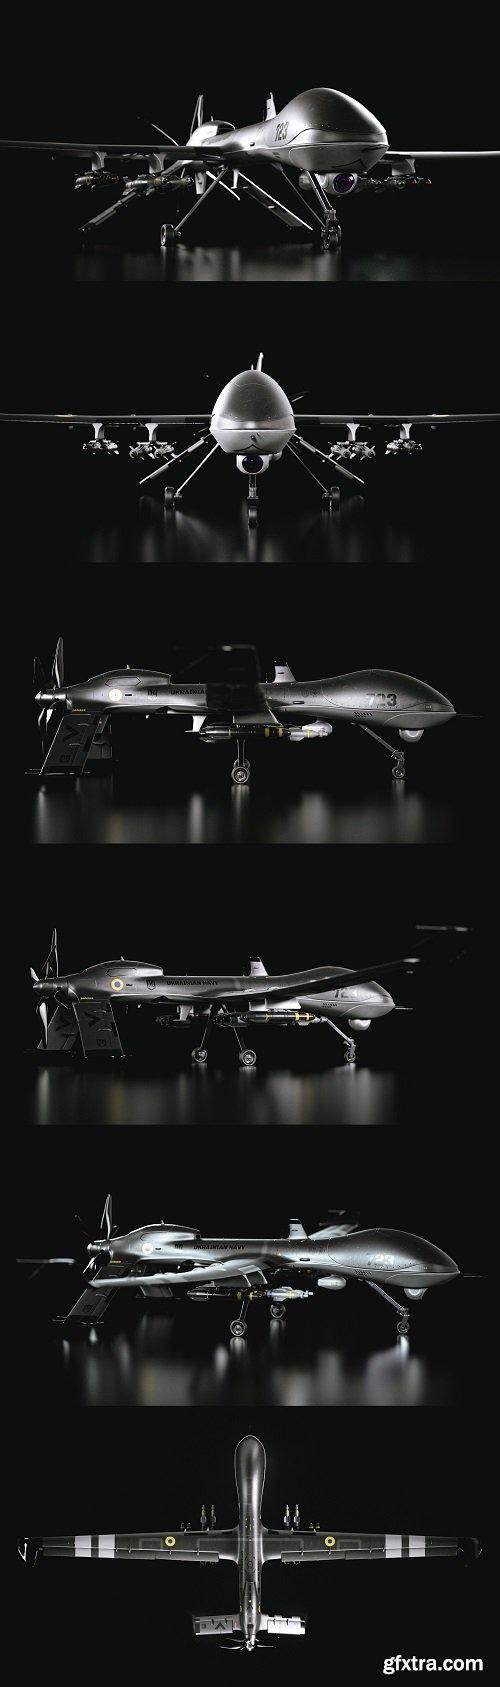 The General Atomics MQ-1 UAF SEAGULL 3D Model